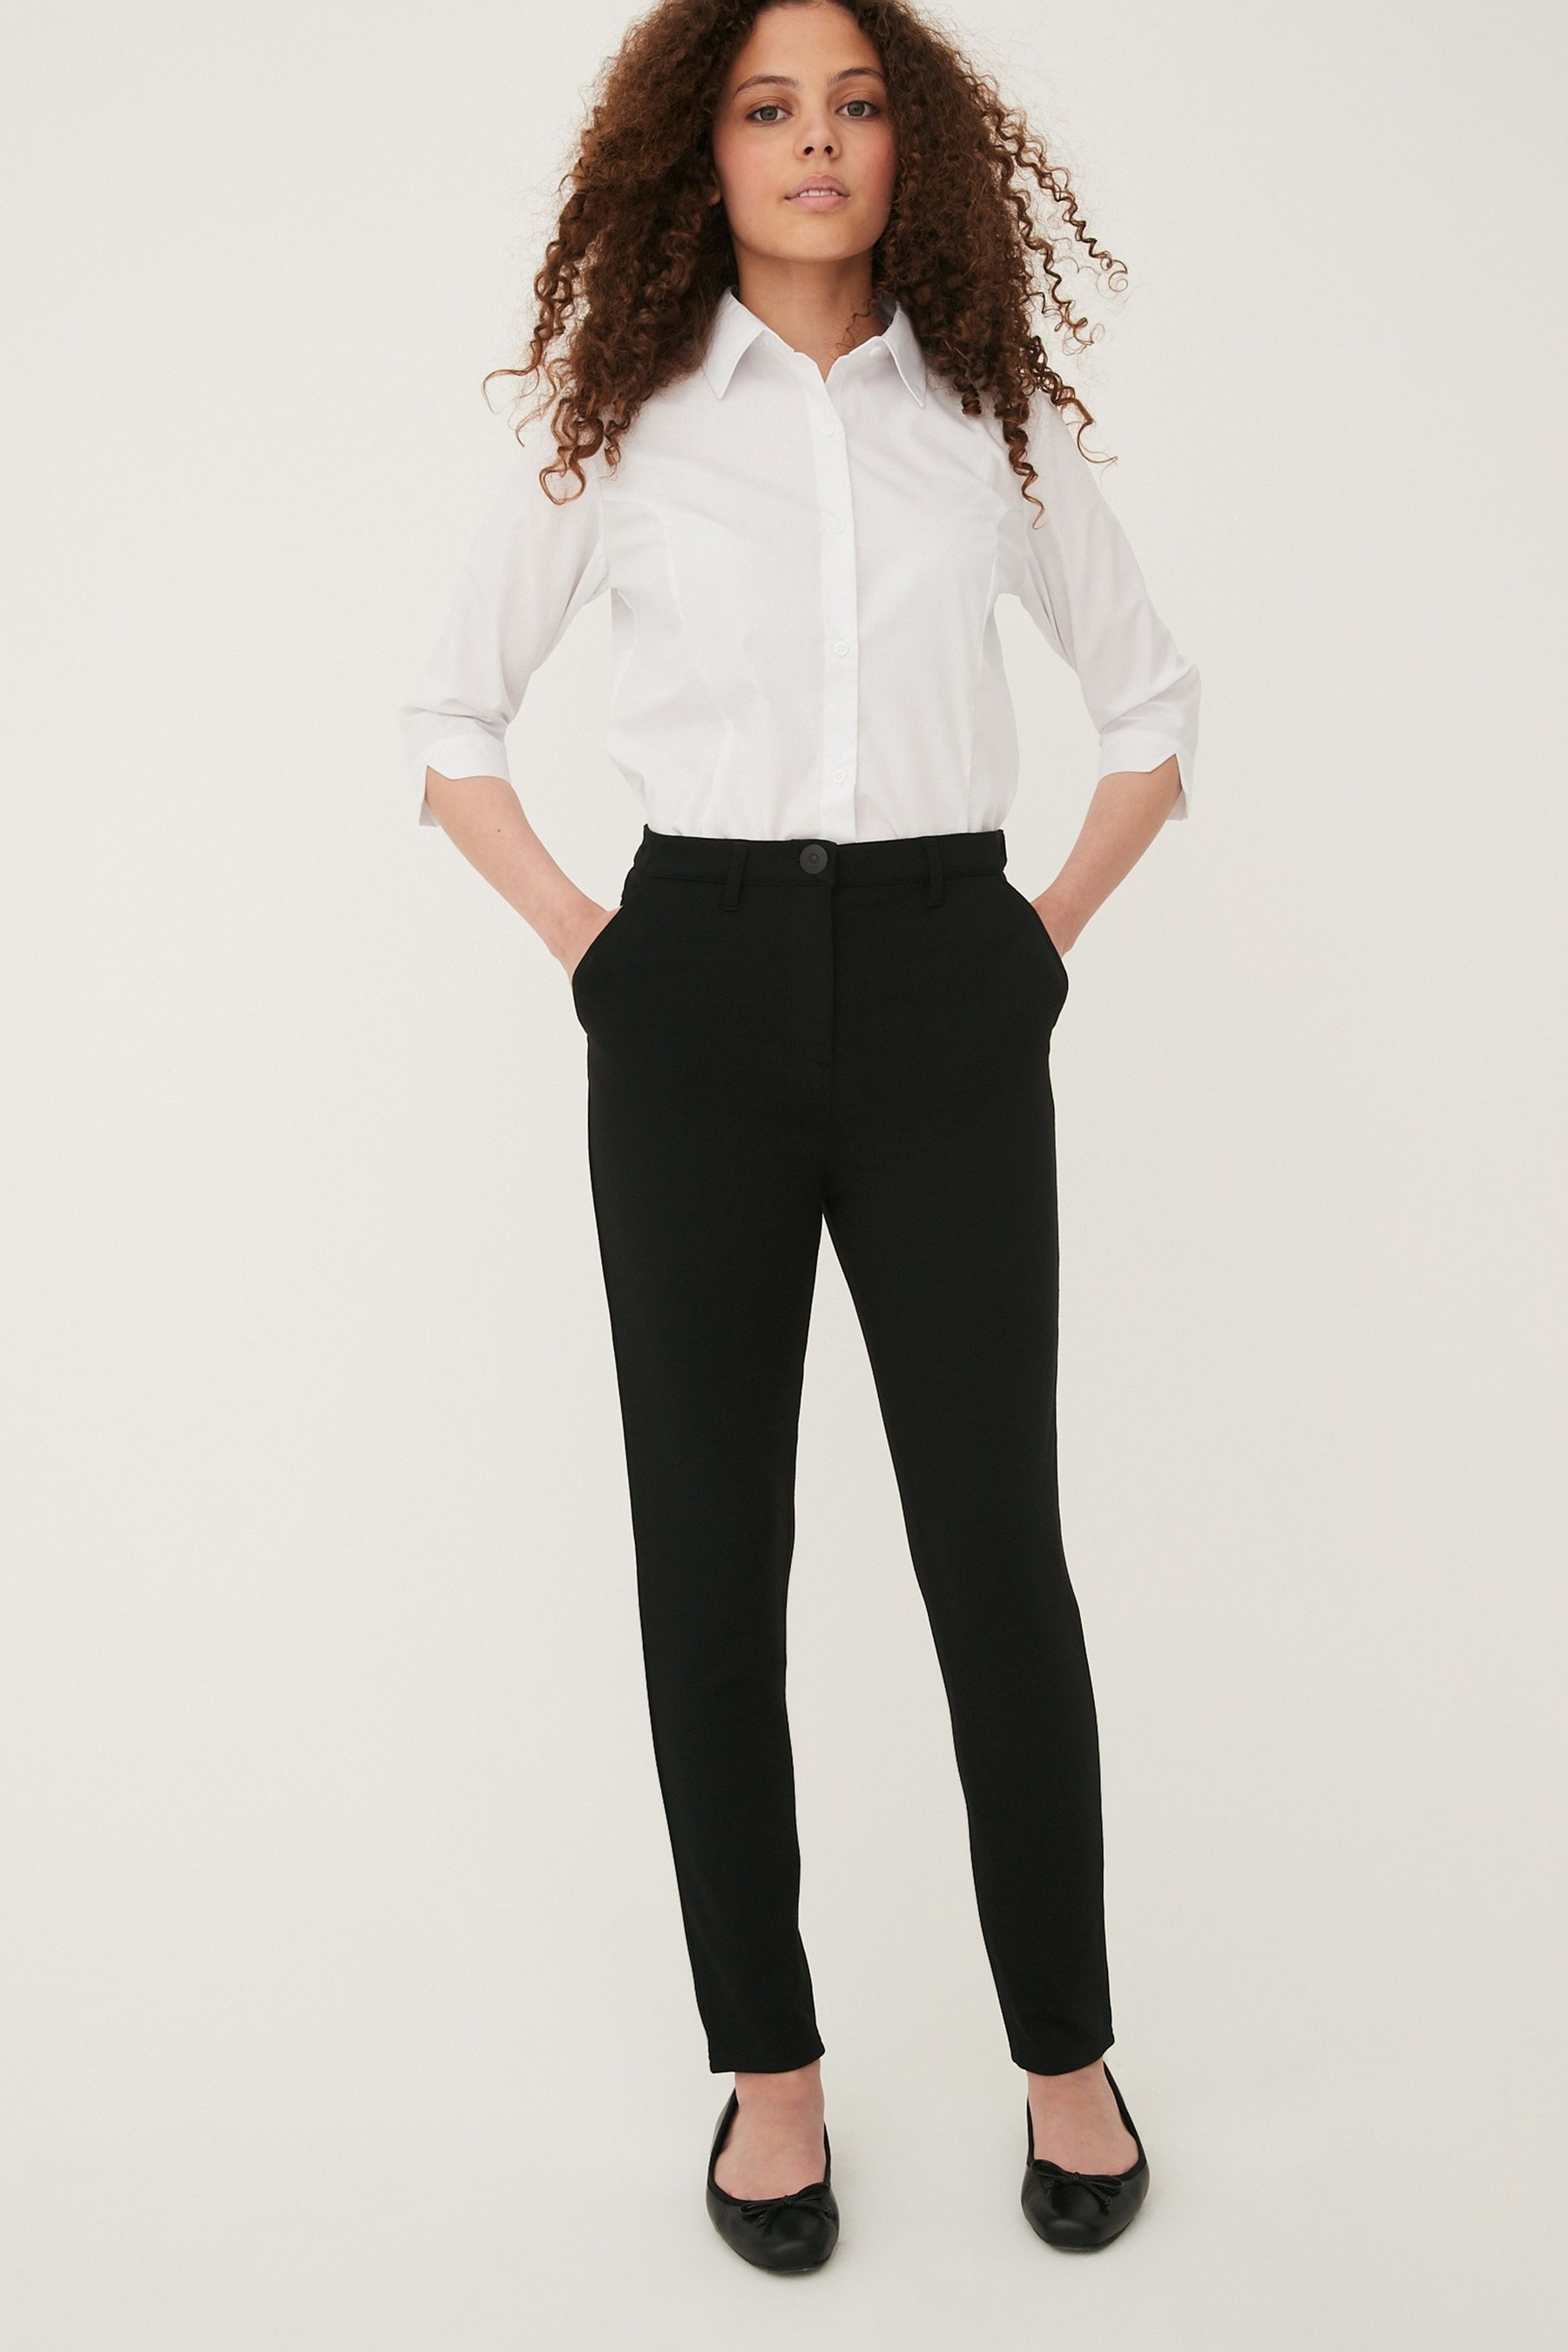 Girls School Trousers Age 7-16 Quality Black Stretch Kids School Pants  Trousers. | eBay